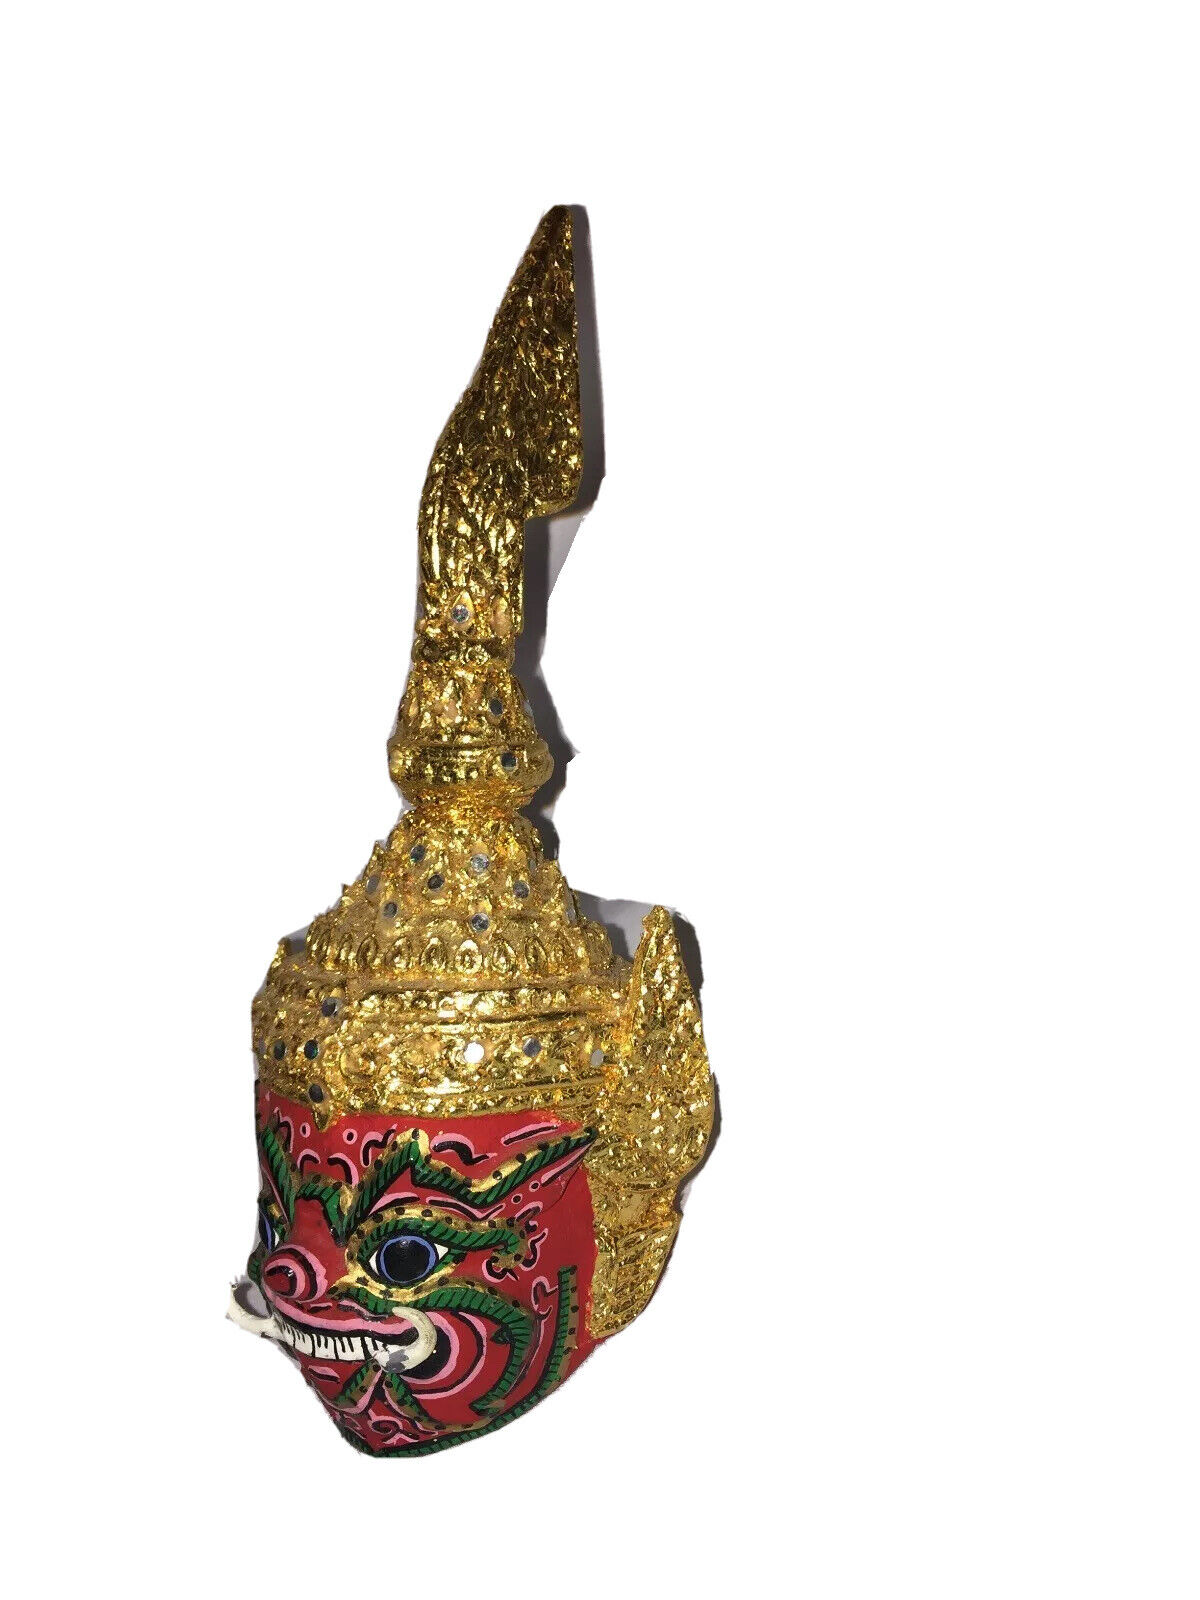 Indian Gods Jeweled Red Gold Head Figurine Religious Decor Hindu 8 Unique Desk